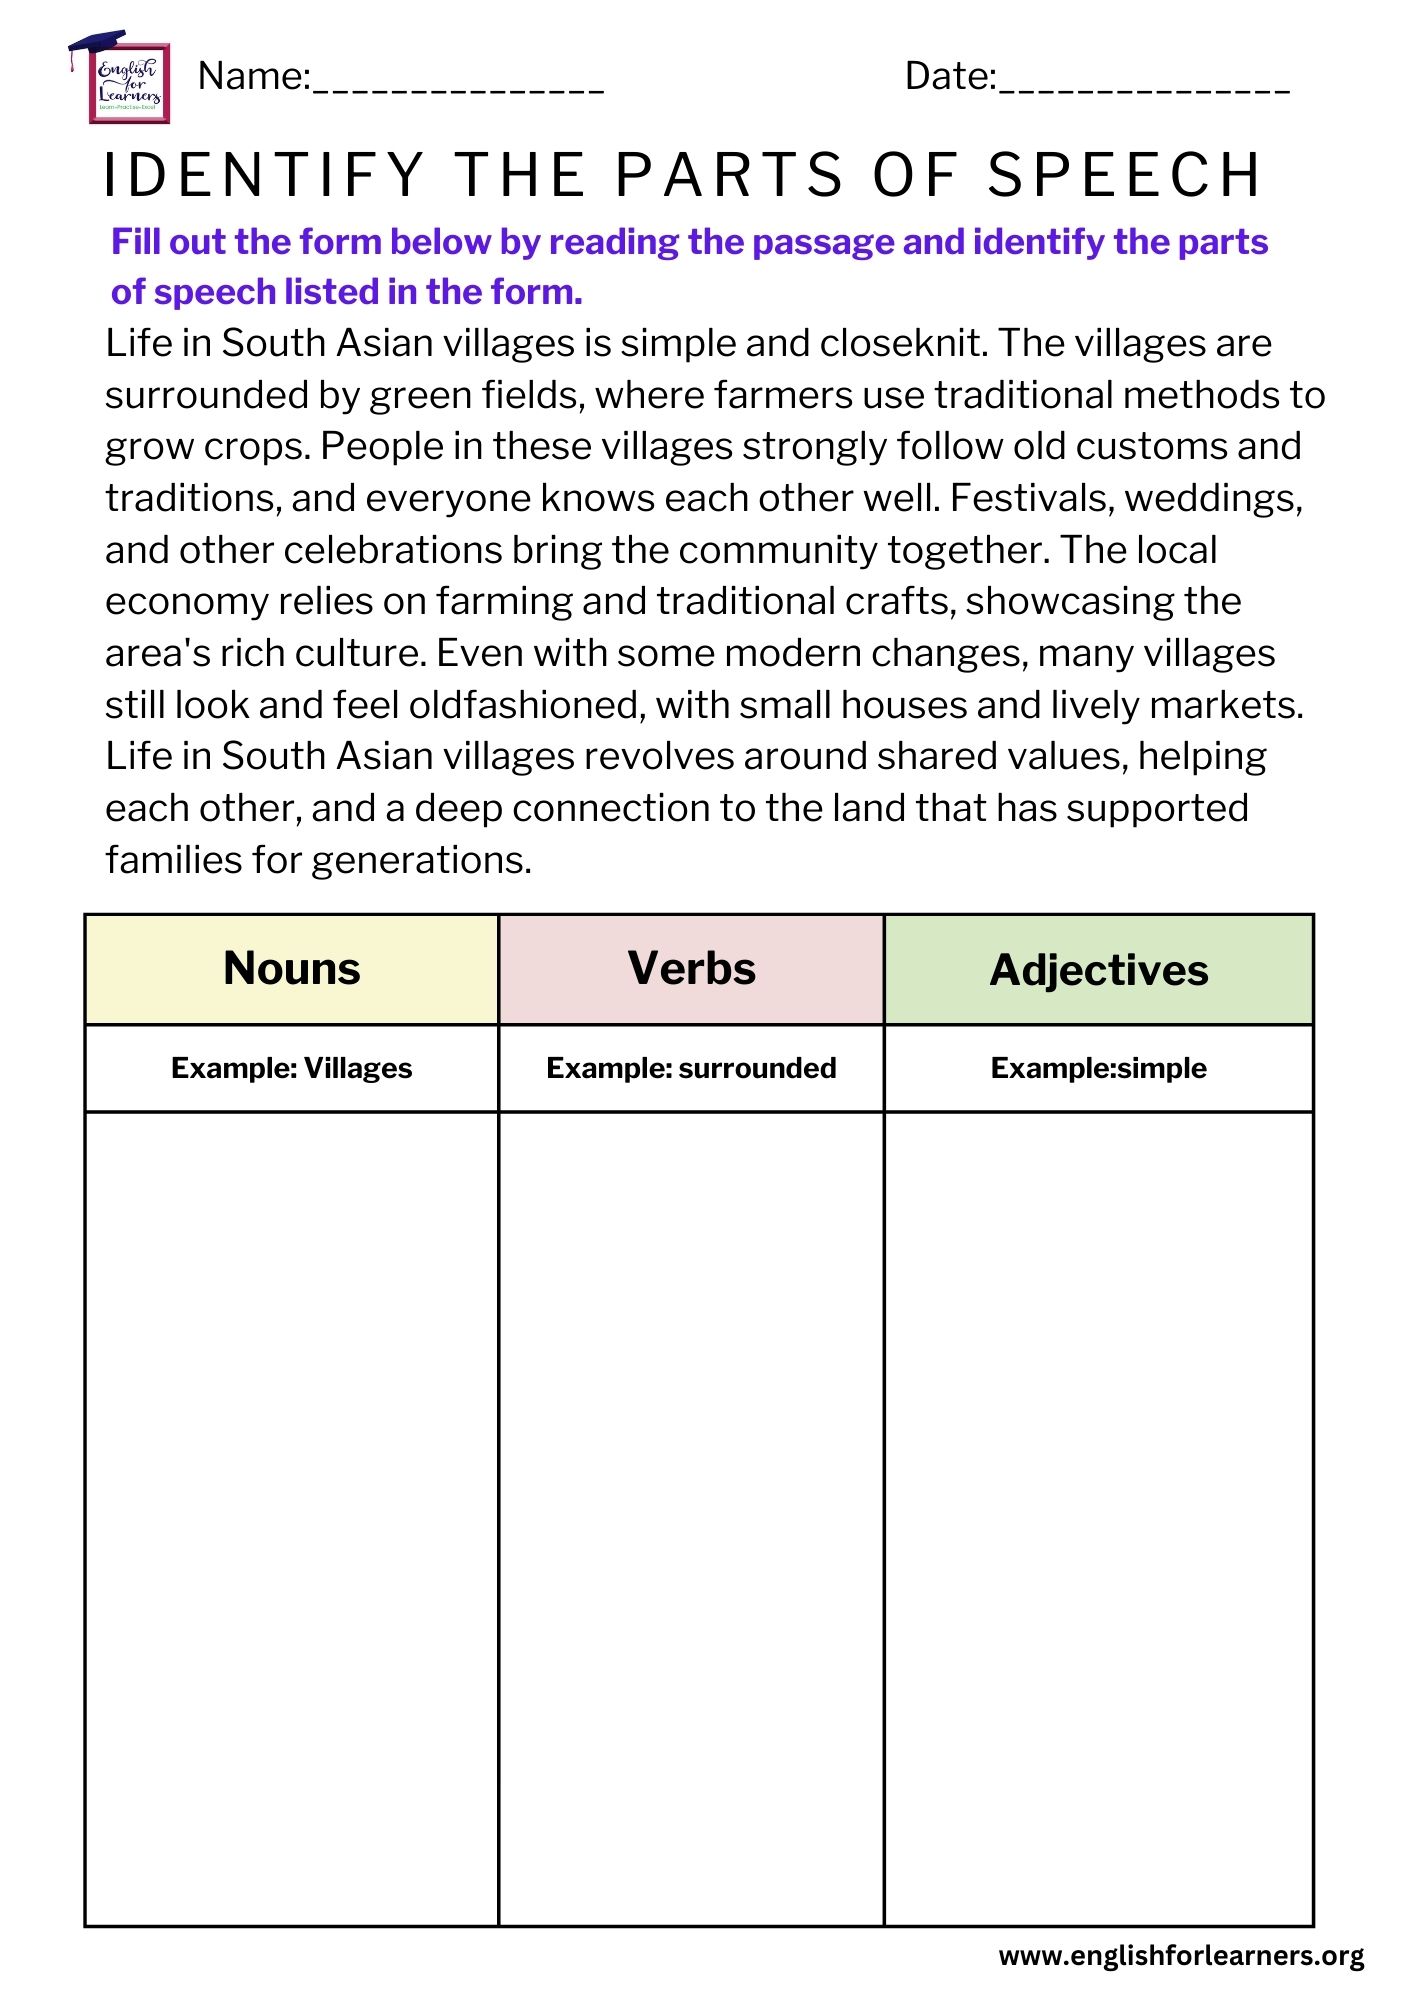 identify parts of speech worksheet, parts of speech quiz
